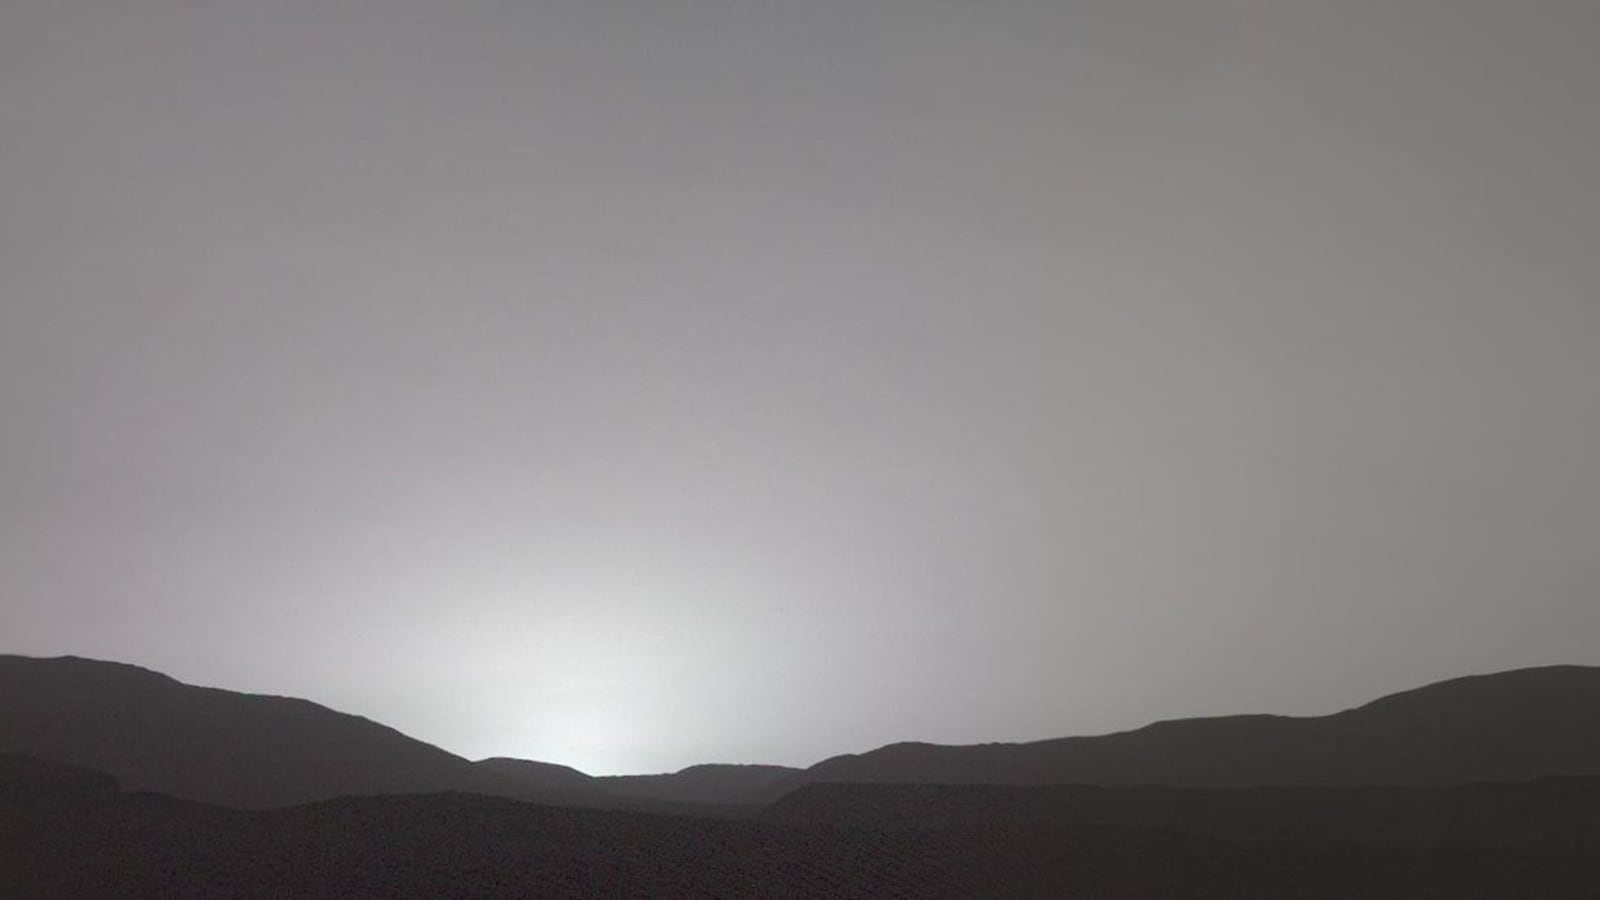 Sunset In Mars Minimal Wallpapers